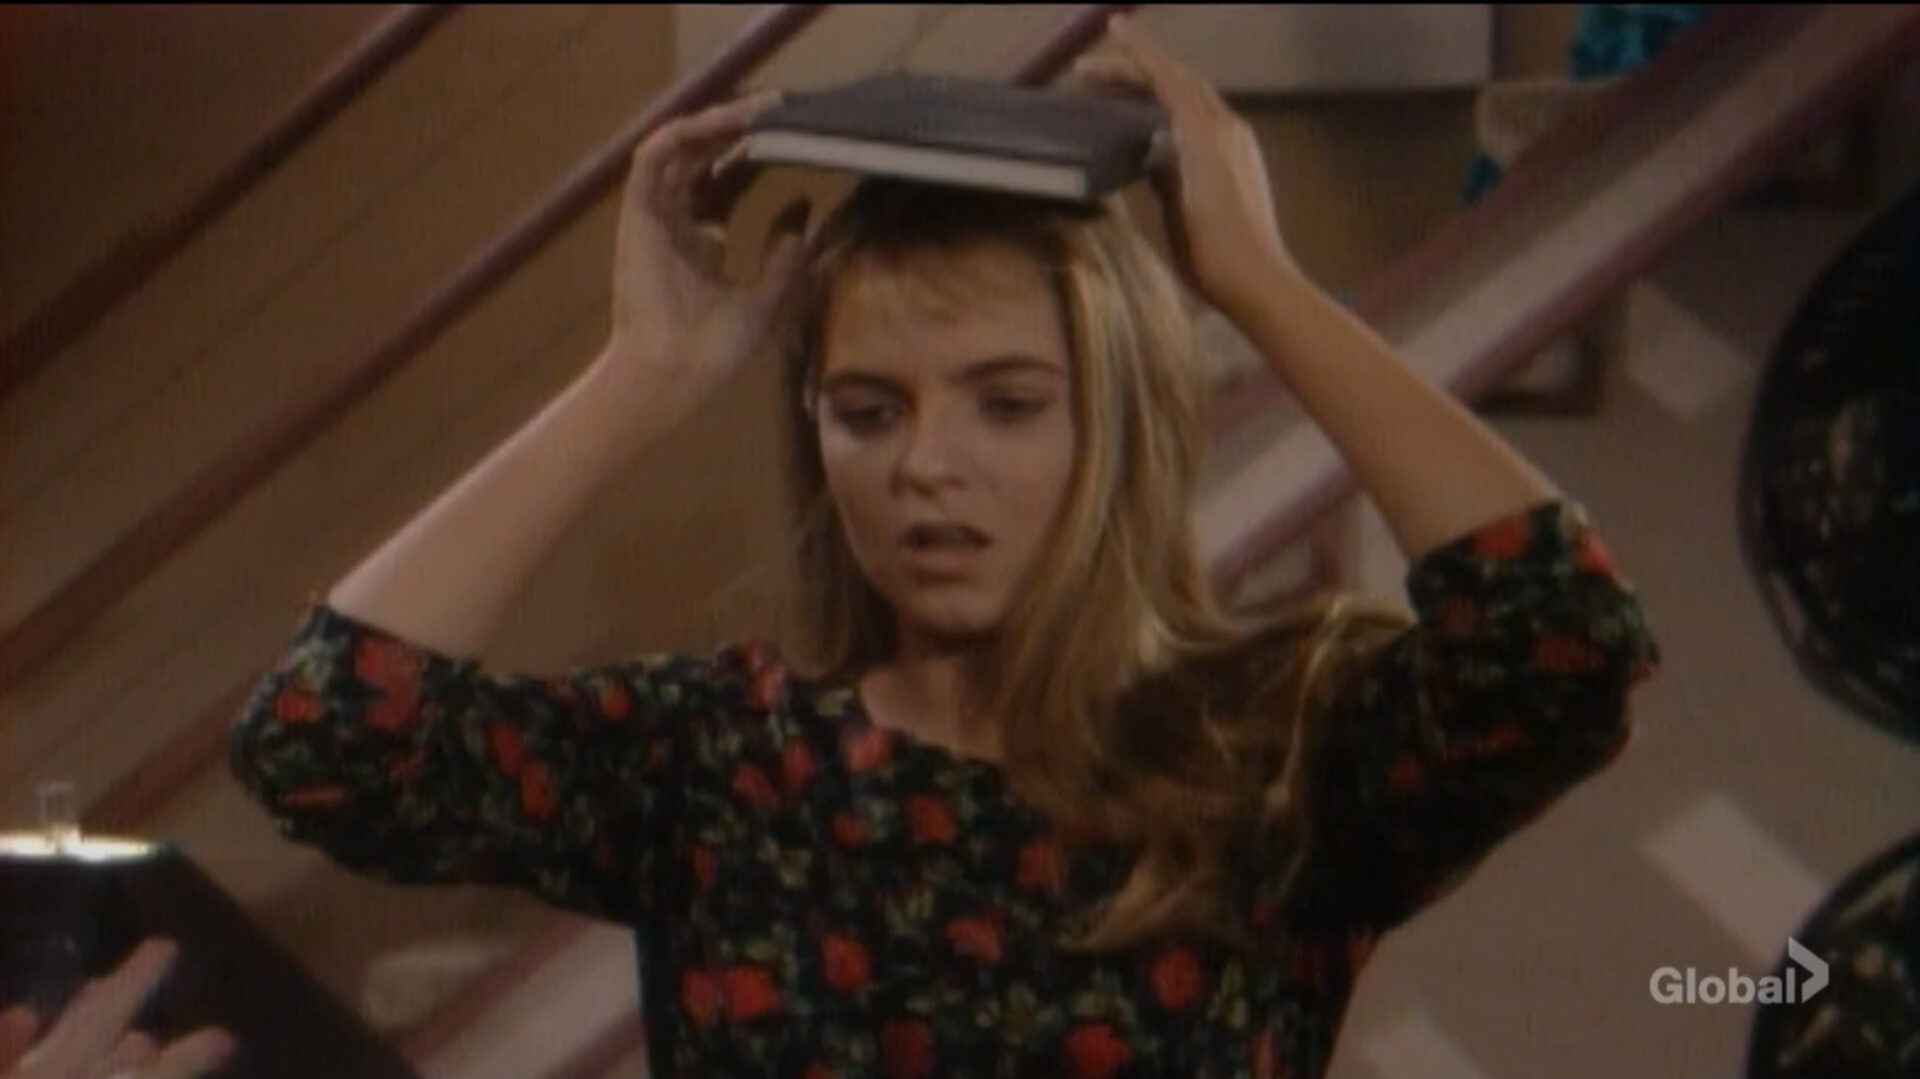 nina book on her head transforming herself